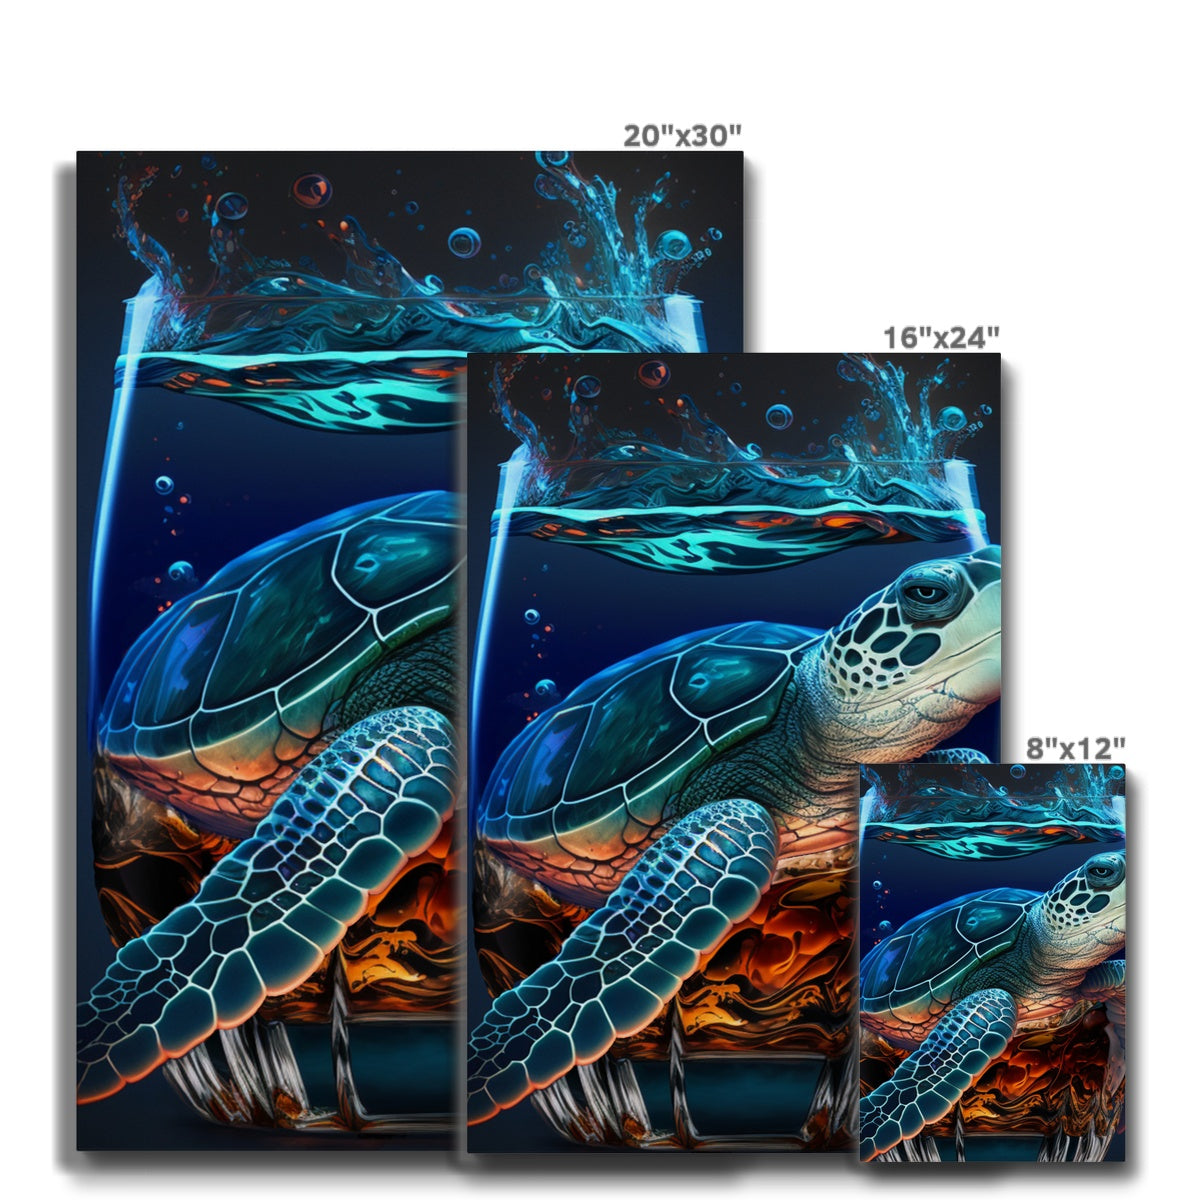 Tipsy Turtle Eco Canvas